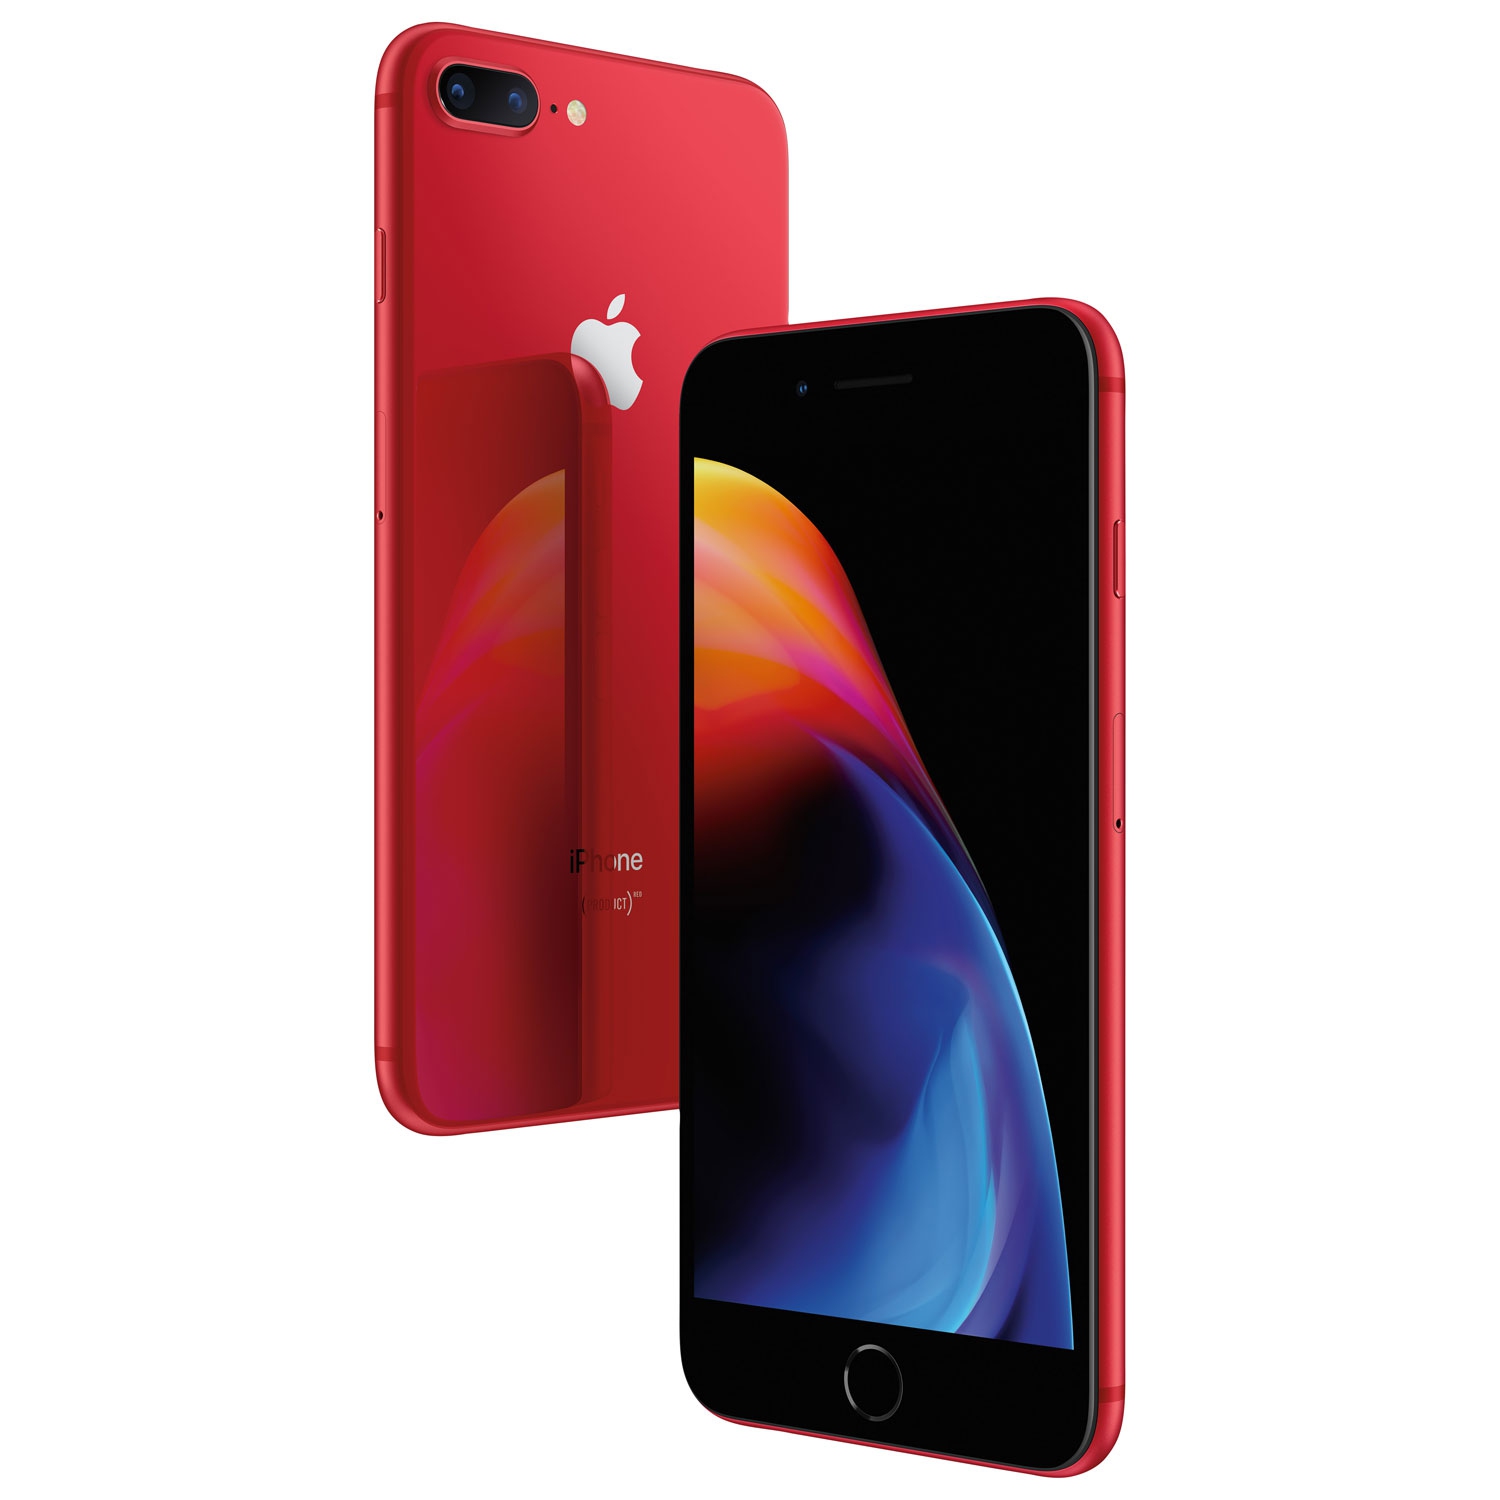 Refurbished (Good) - Apple iPhone 8 64GB Smartphone - (Product)RED - Unlocked